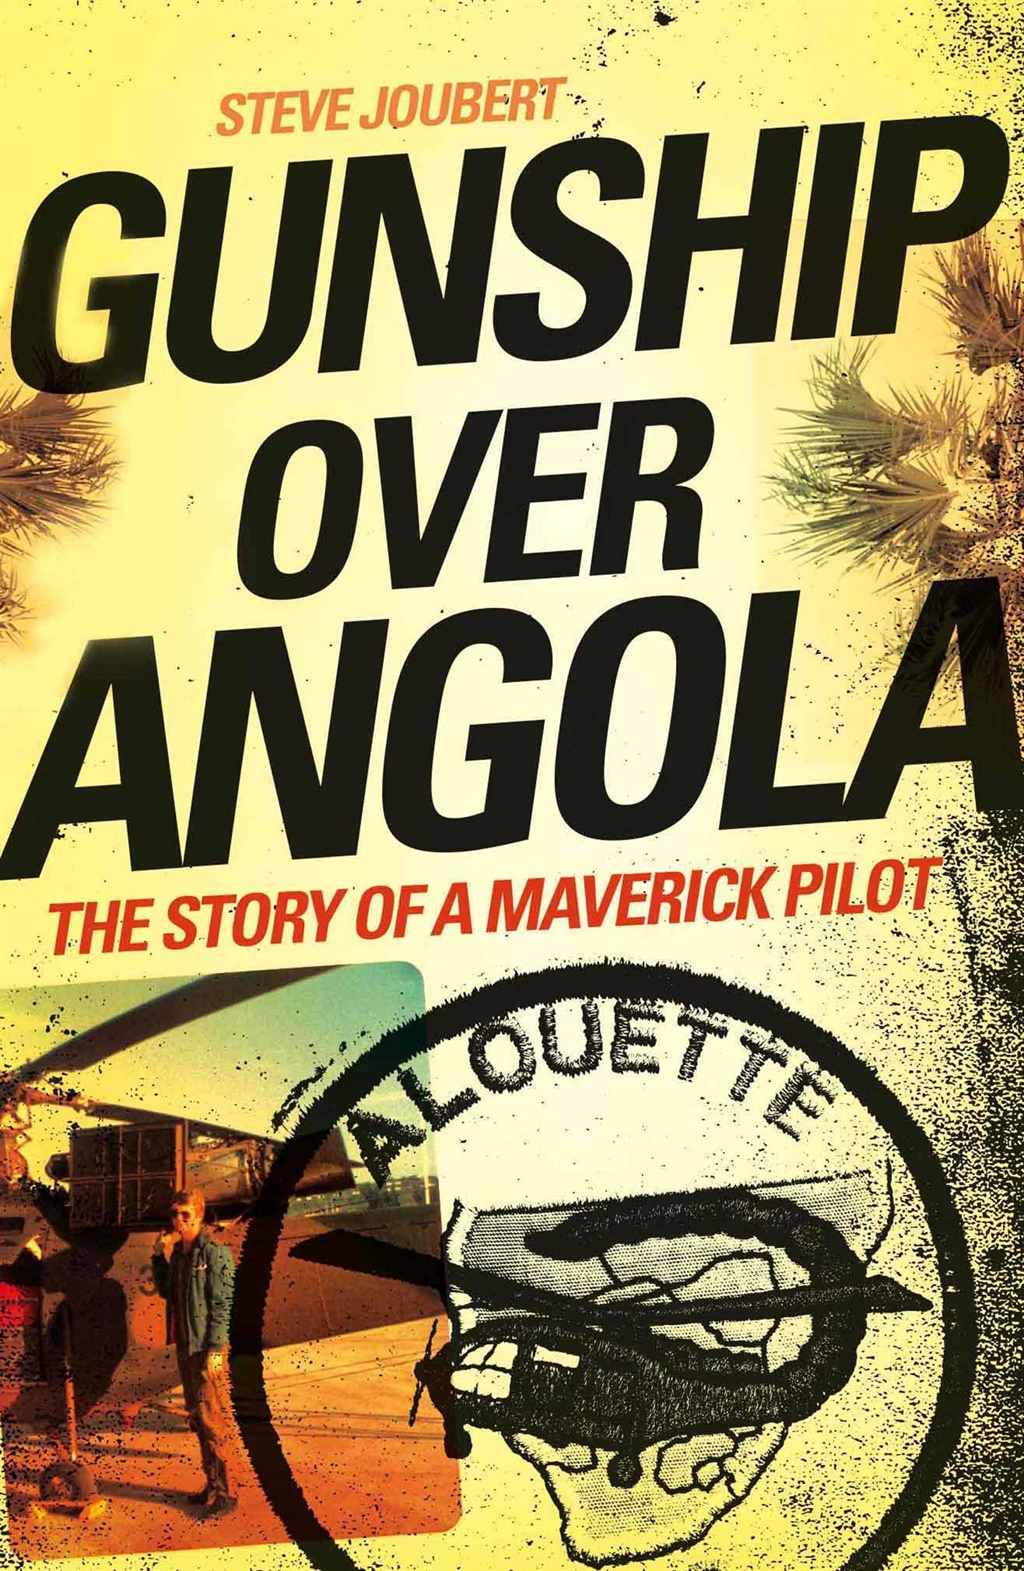 Gunship over Angola written by Steve Joubert, published by Delta Books.